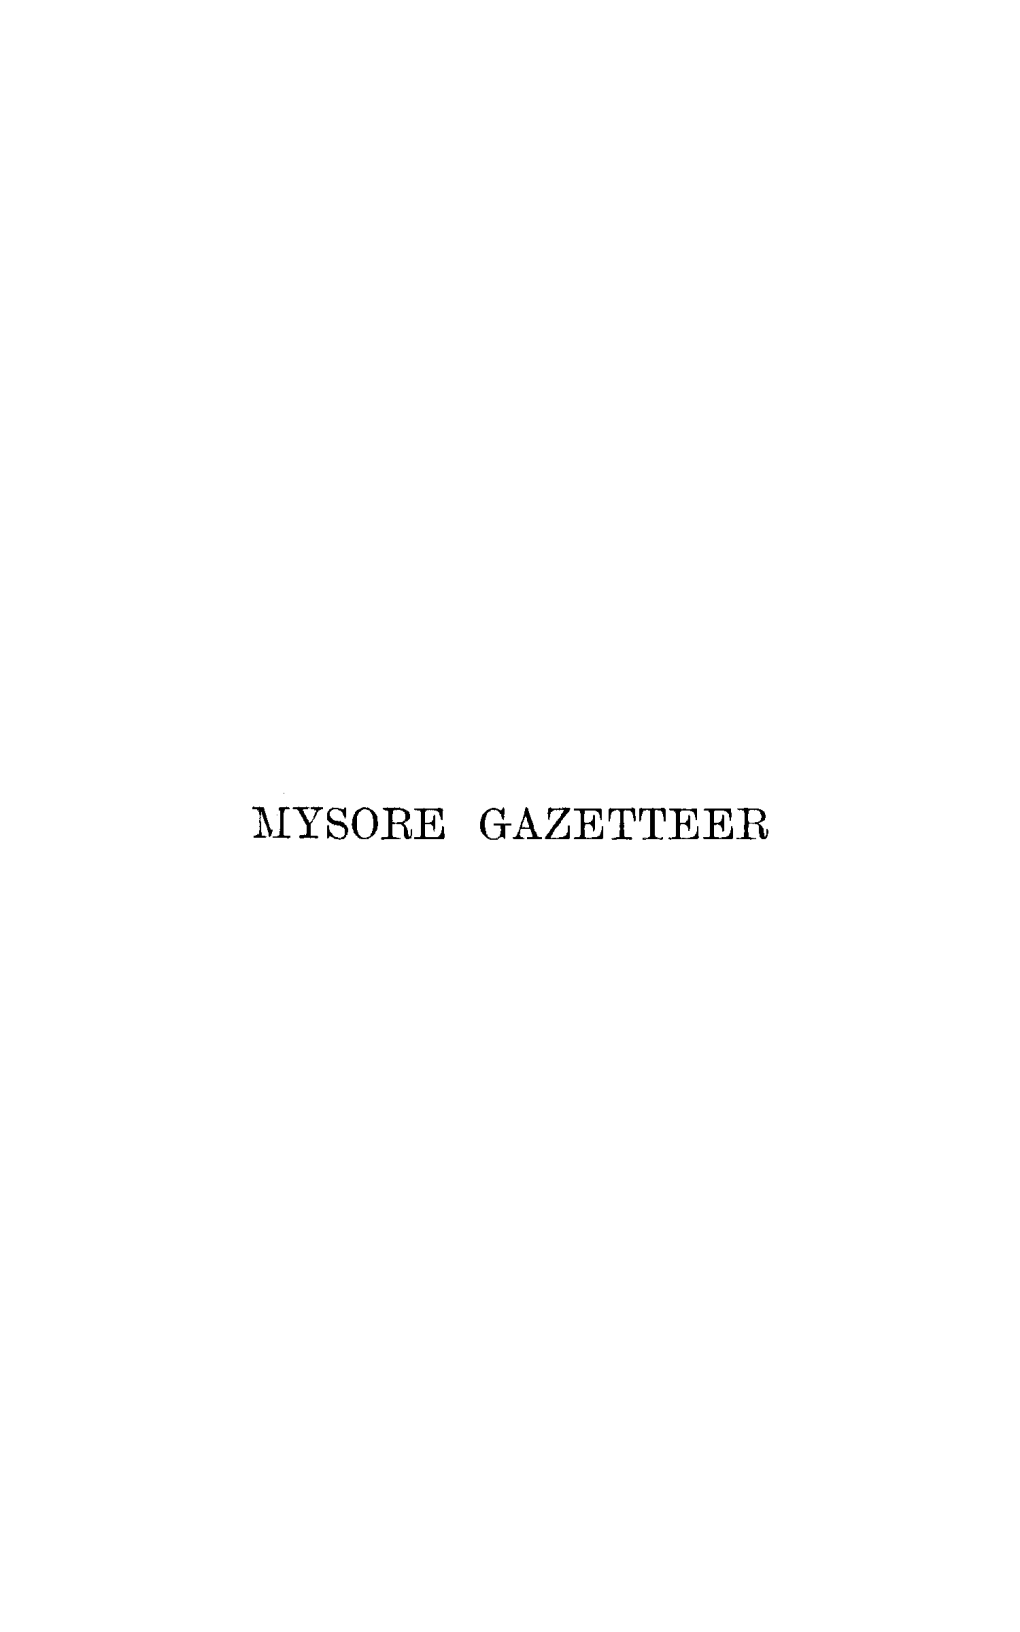 1Iysore Gazetteer Mysore Gazetteer